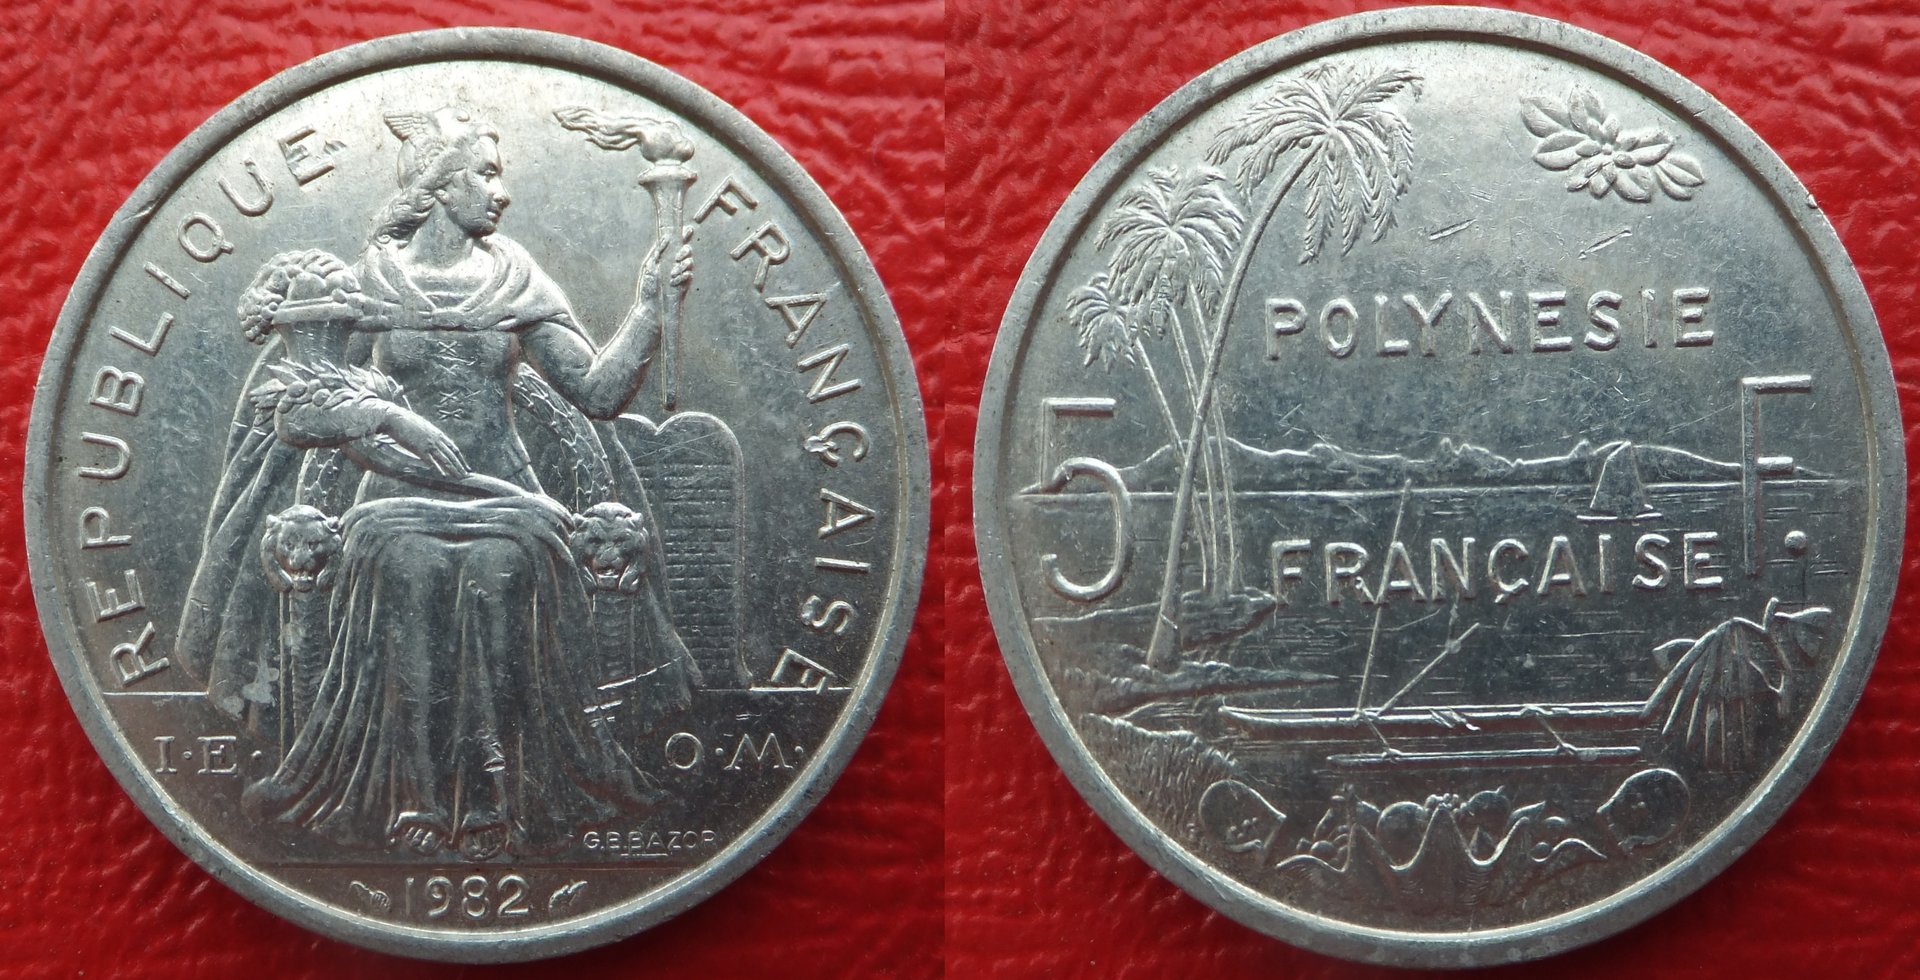 French Polynesia 5 francs 1982 (3).JPG